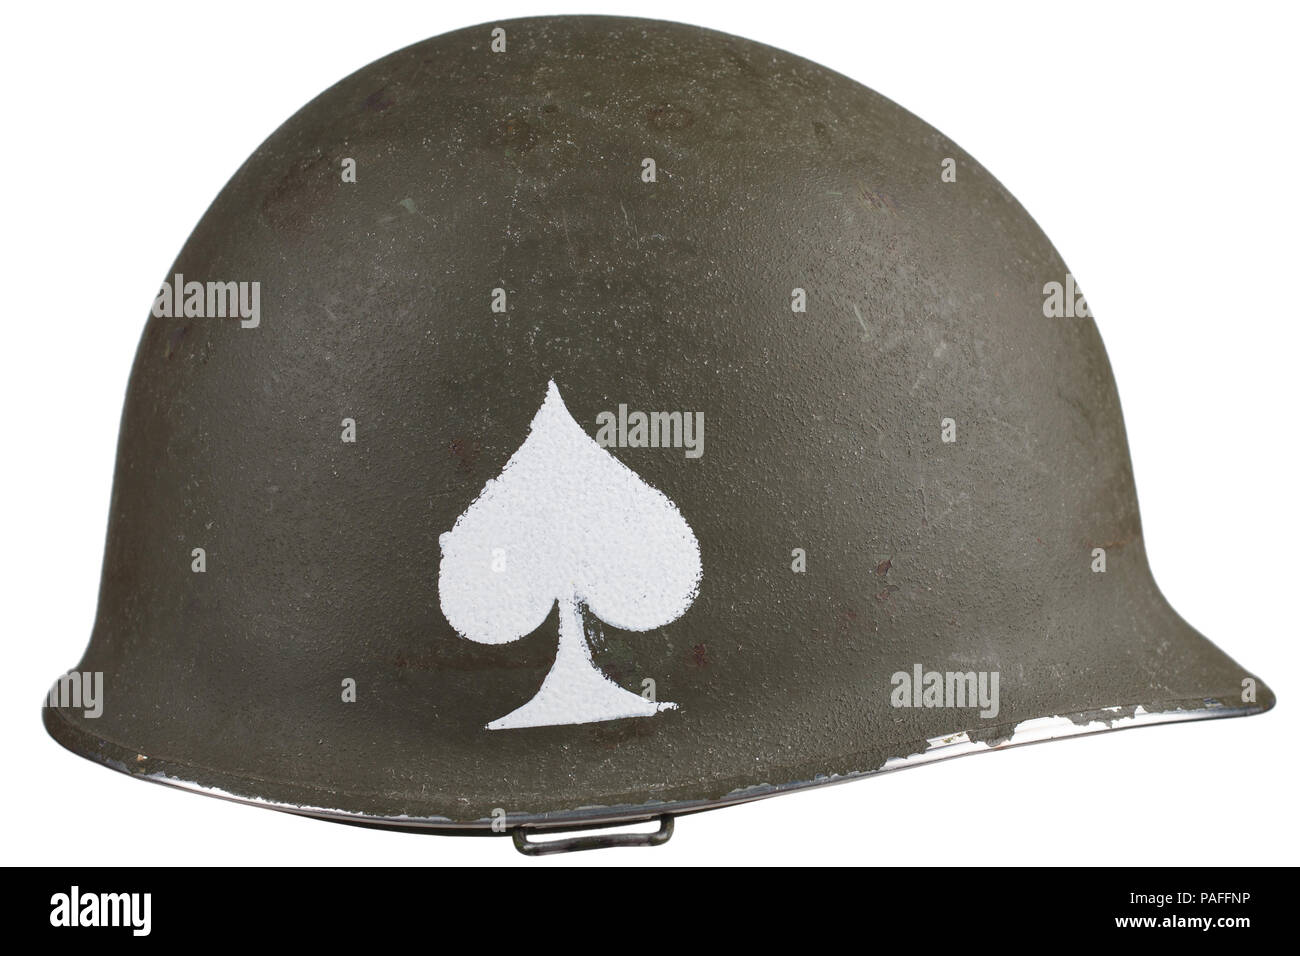 ww2 us army helmet with ace of spades emblem isolated Stock Photo - Alamy